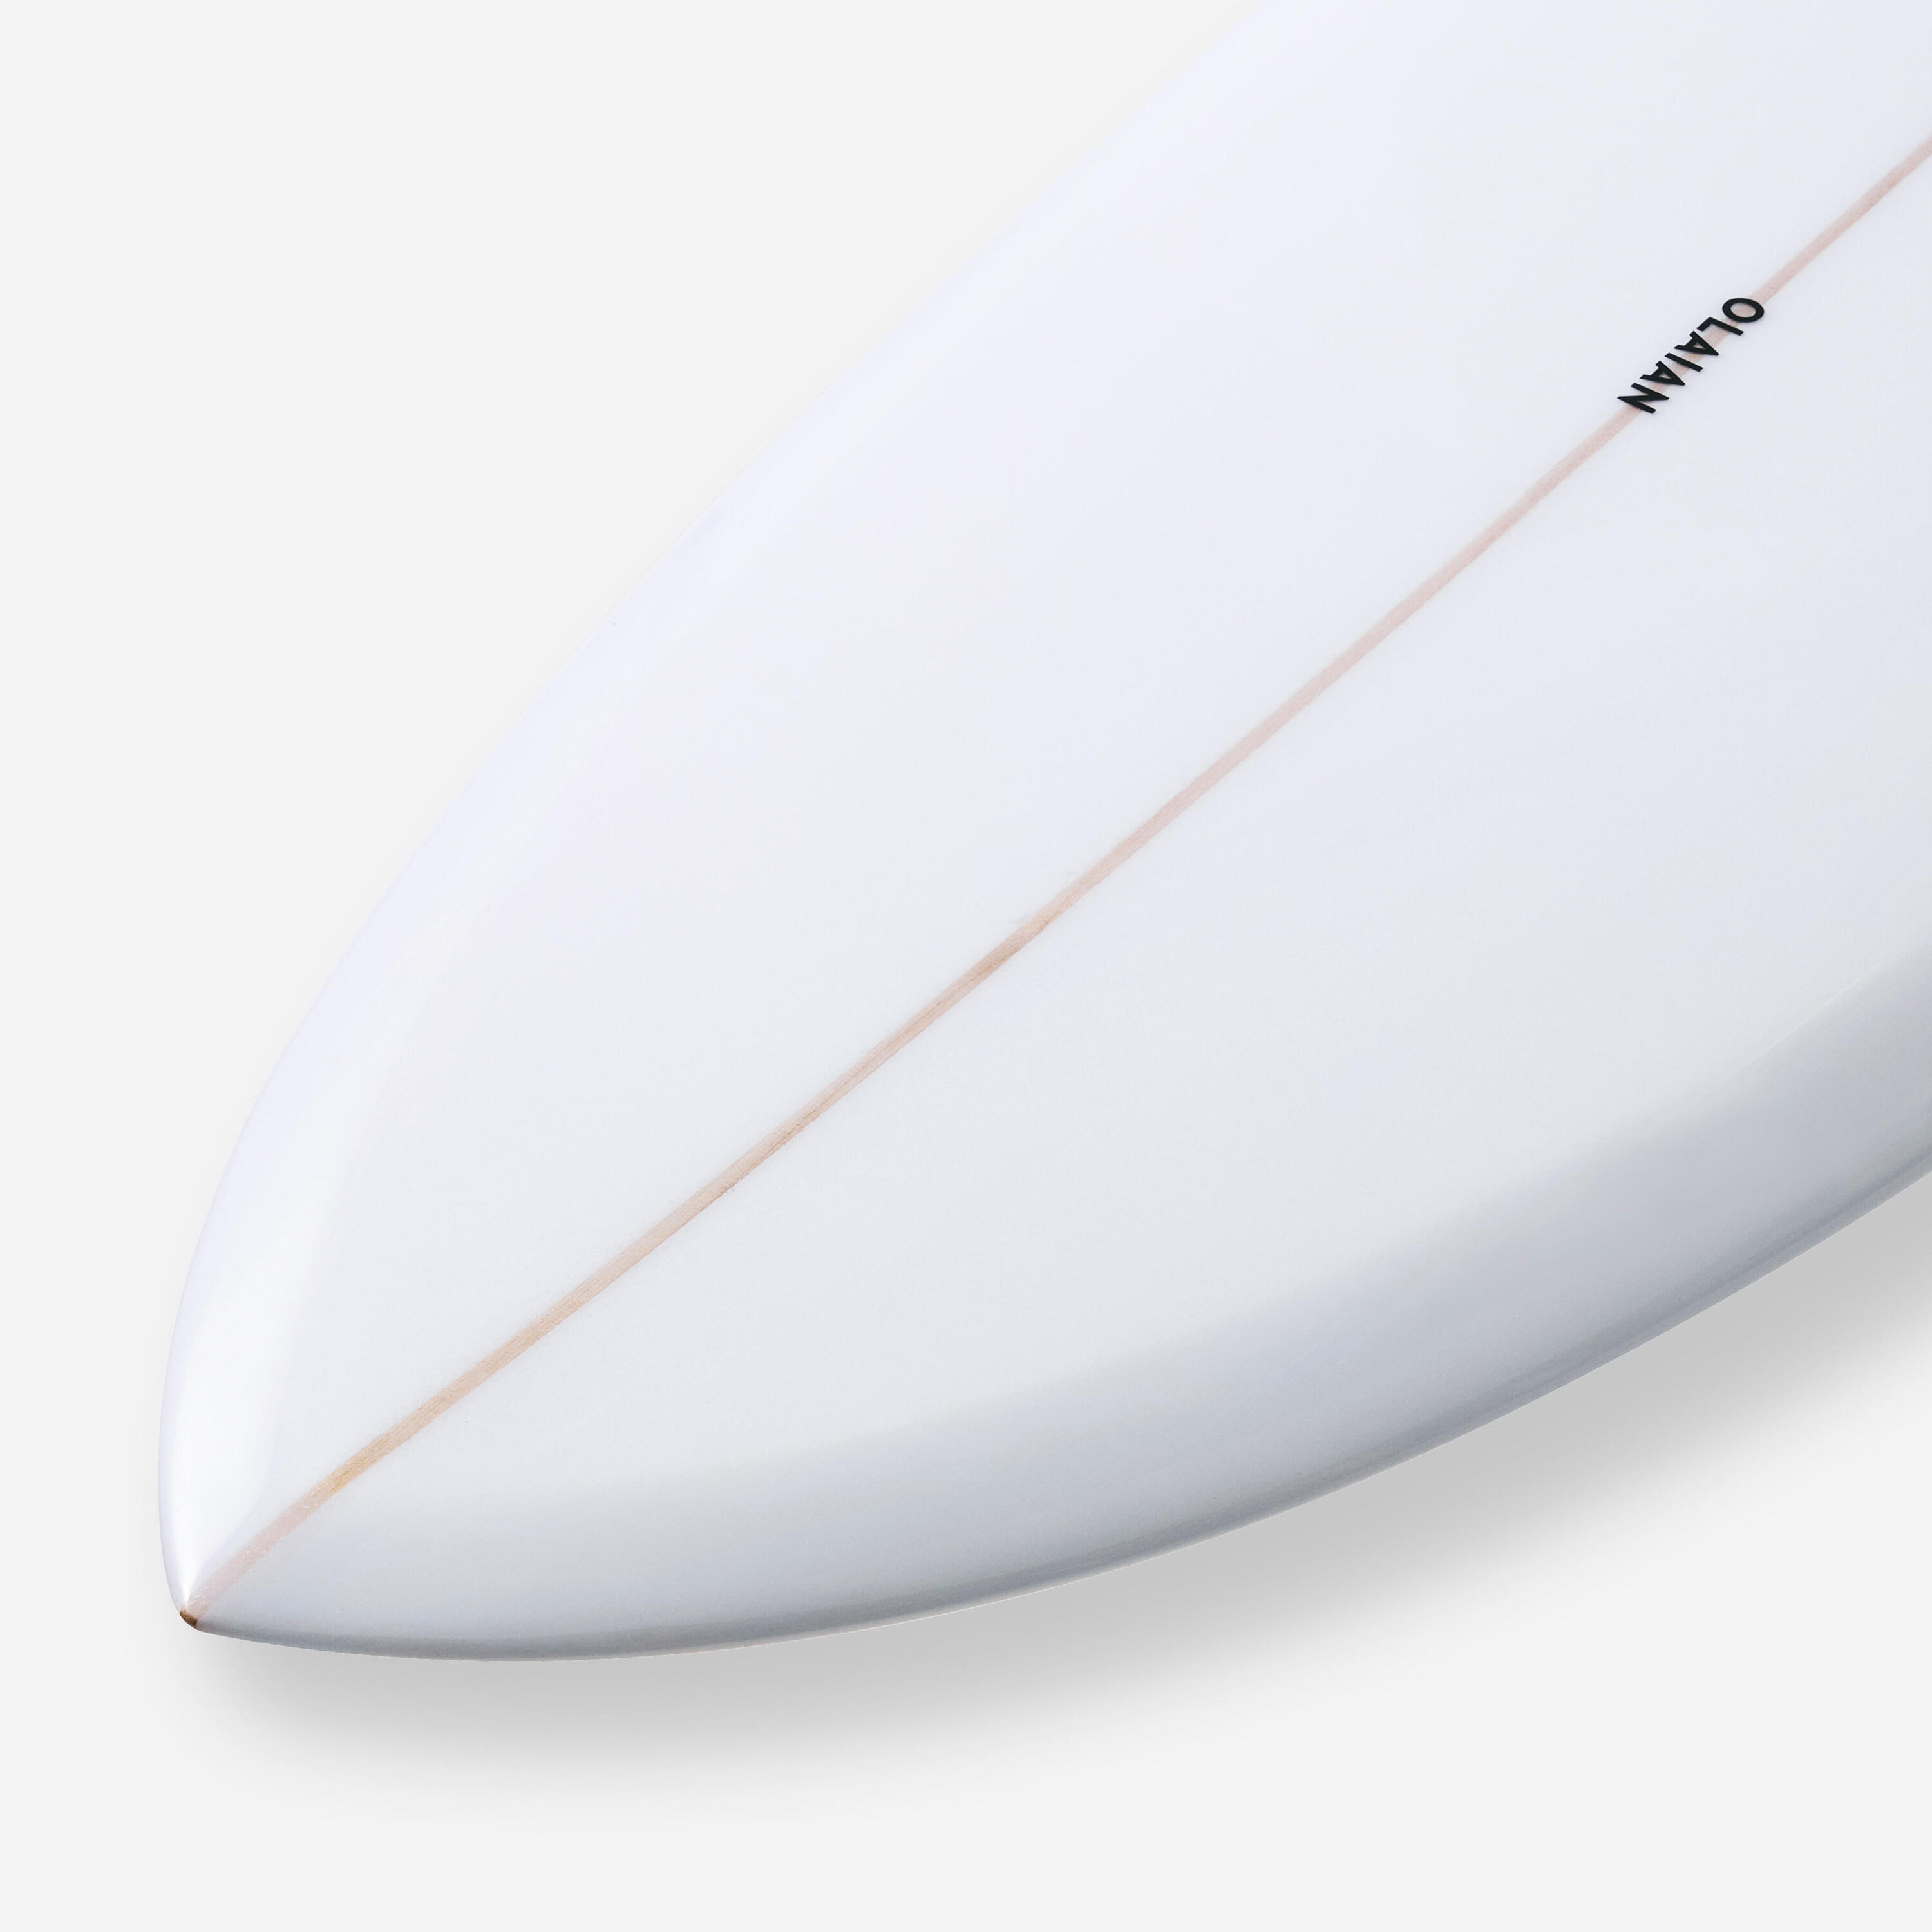 Surfboard 6'8" - 900 mid-length white 3/11